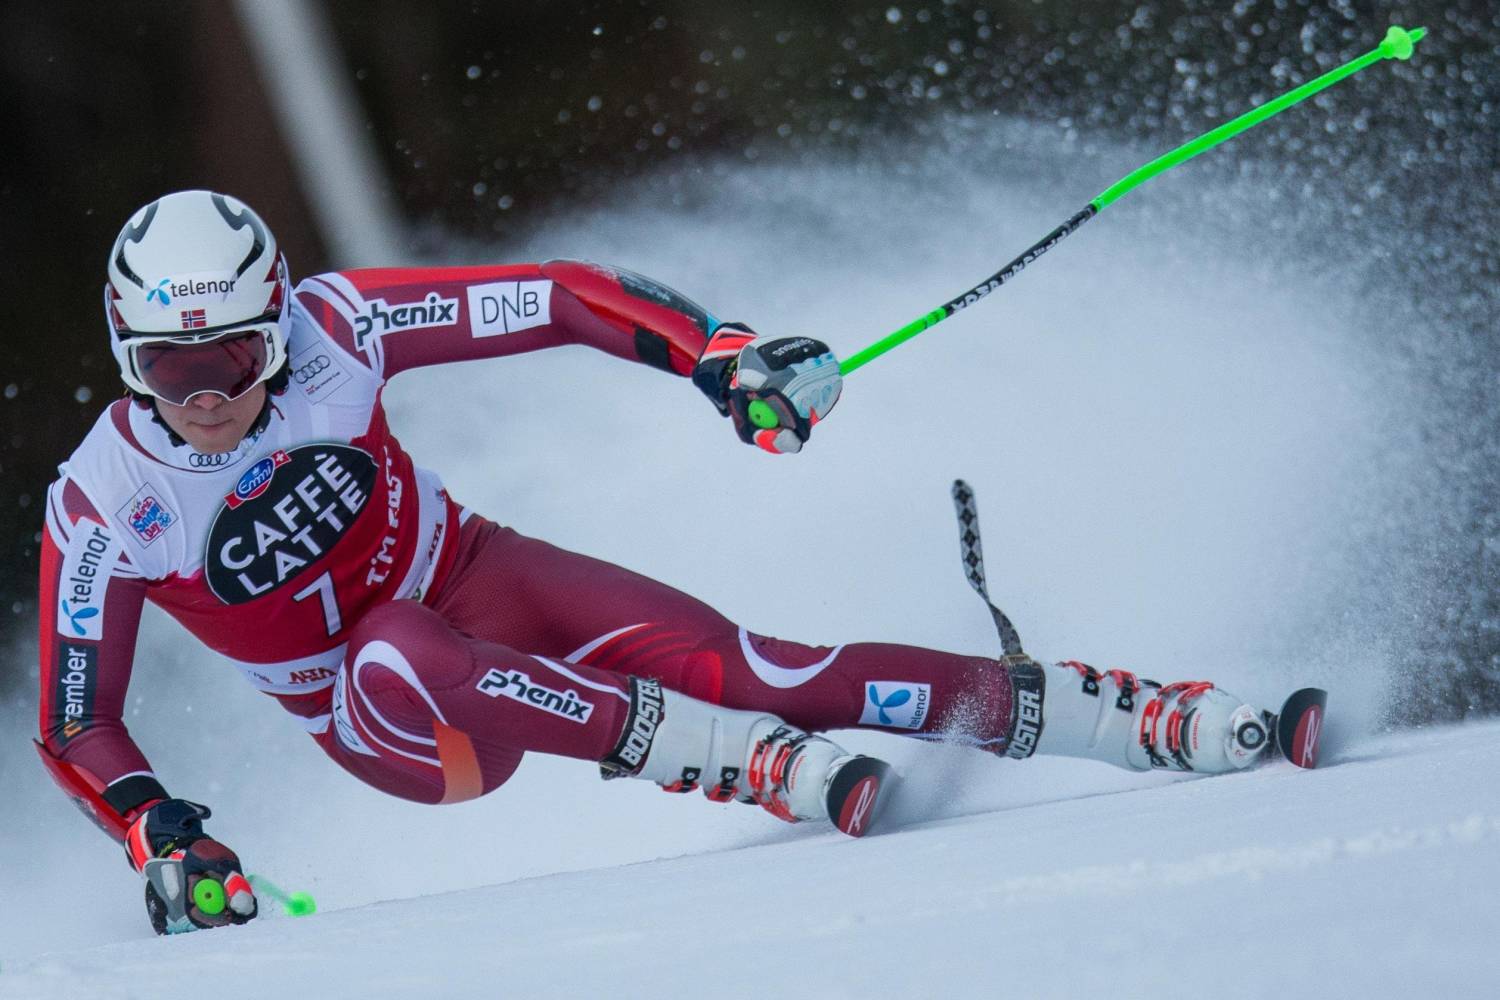 FIS Alpine Ski World Cup Finals 2016 Preview